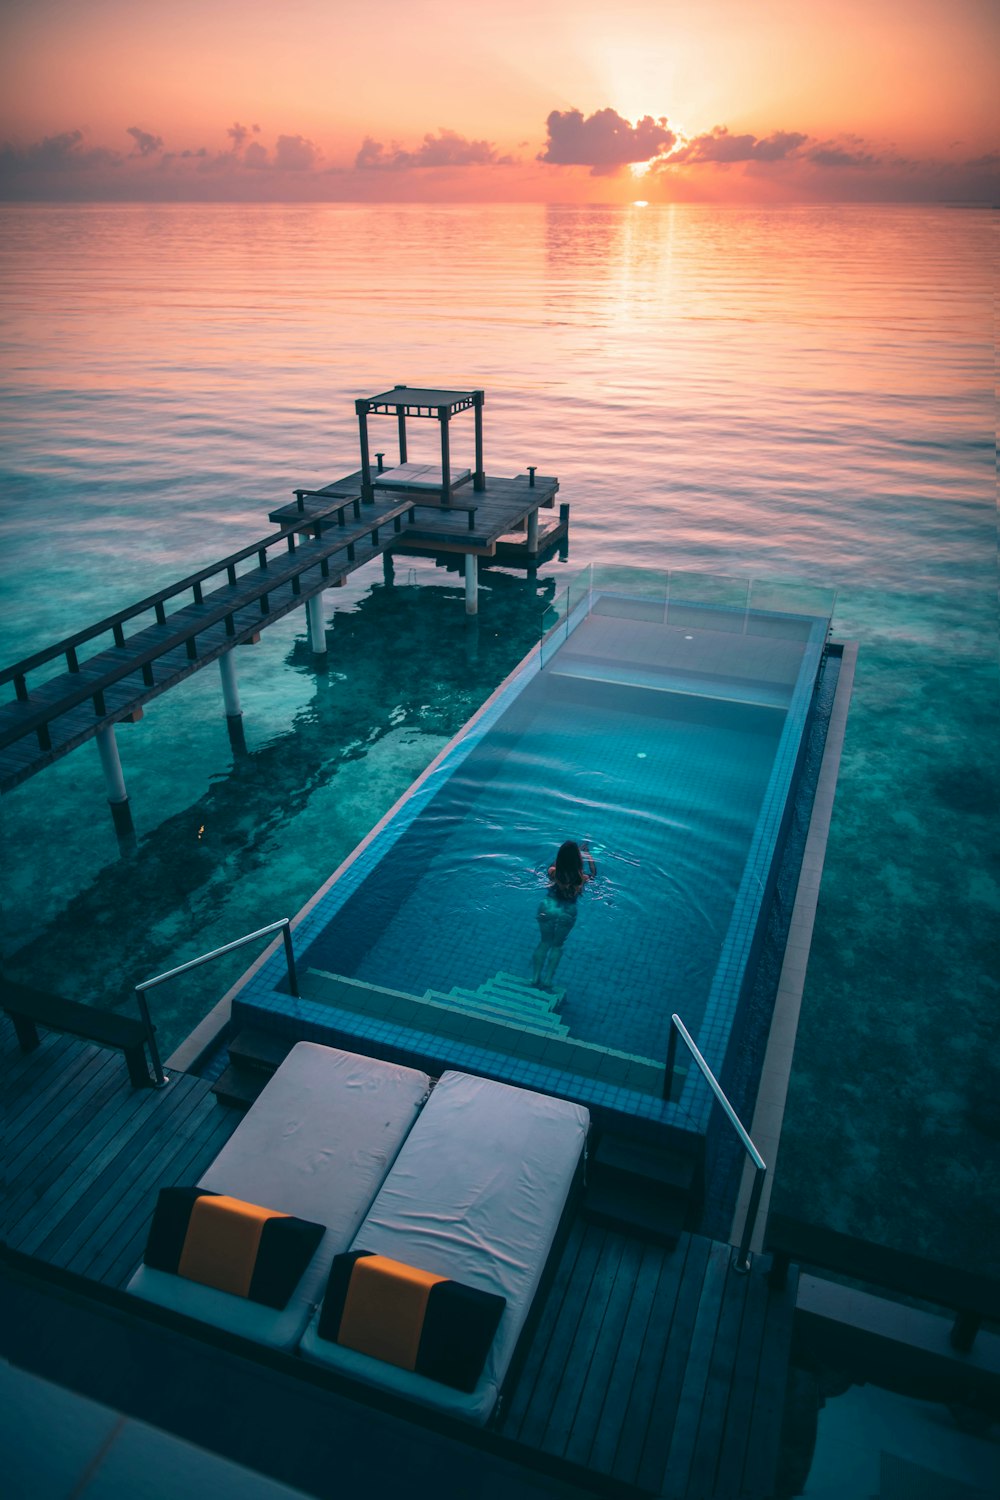 woman swimming in infinity pool at sunrise